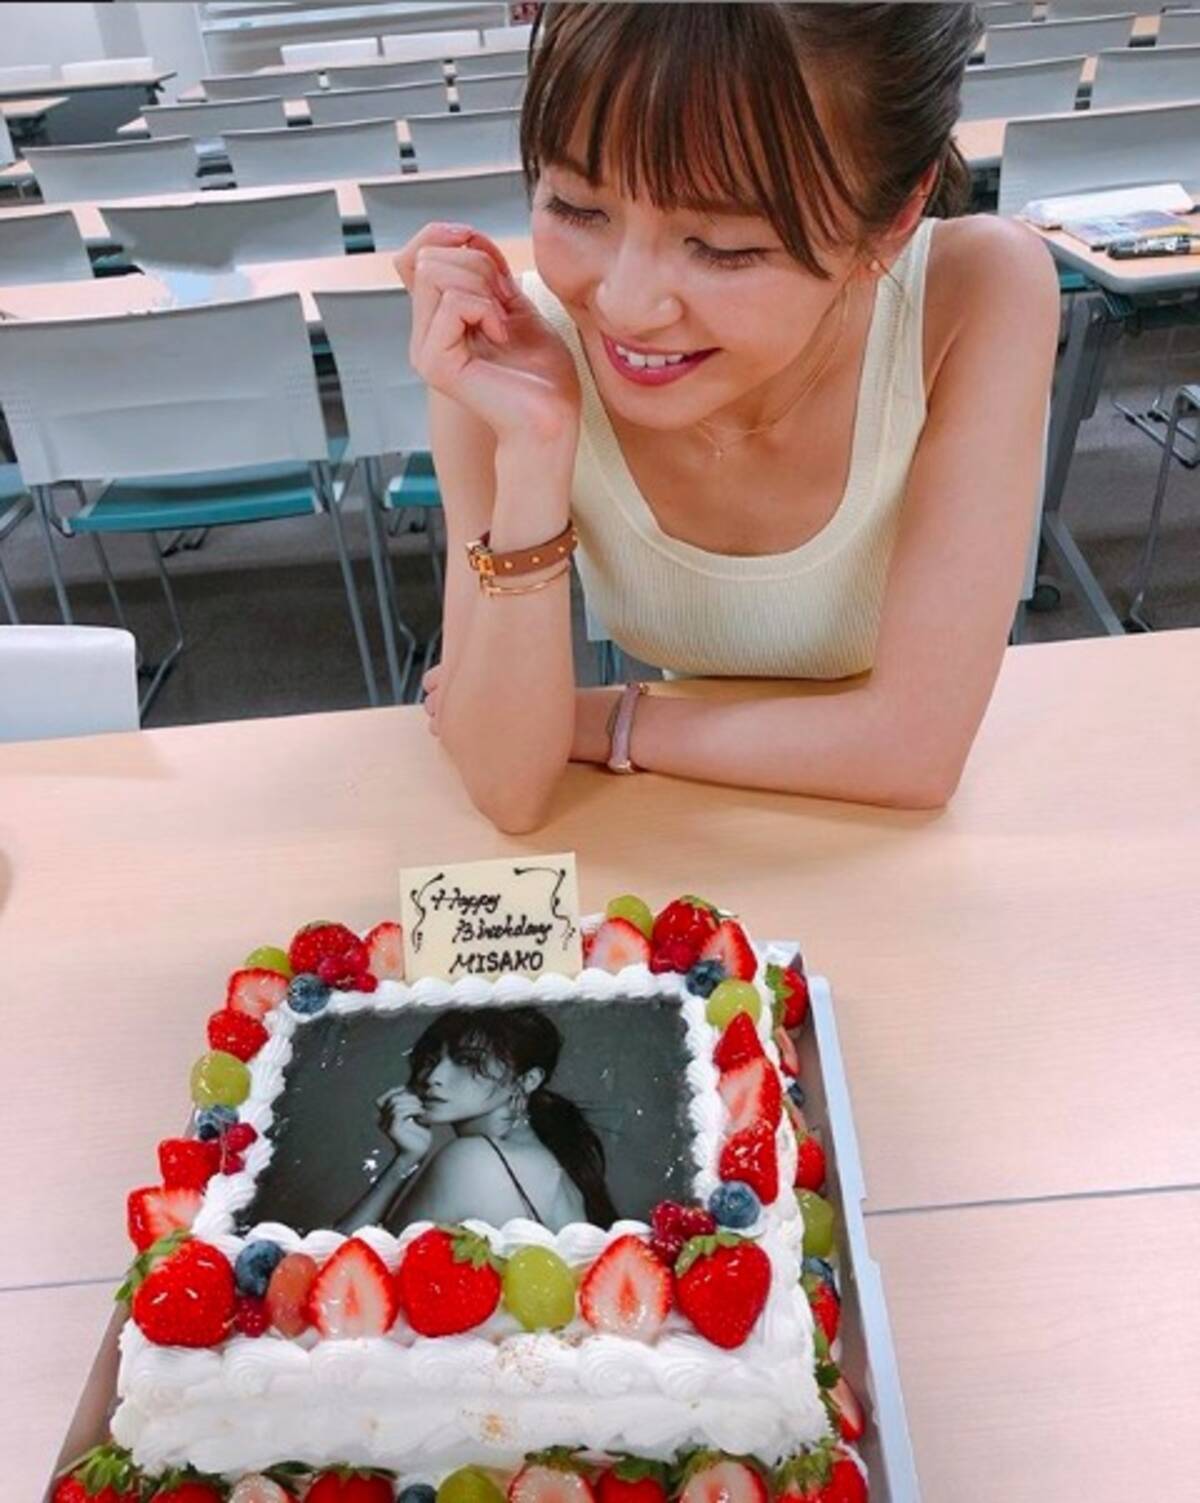 a宇野実彩子 33歳の誕生日ケーキ ノースリーブ写真公開で 33歳に見えない美しさ 日に日に可愛く 19年7月17日 エキサイトニュース